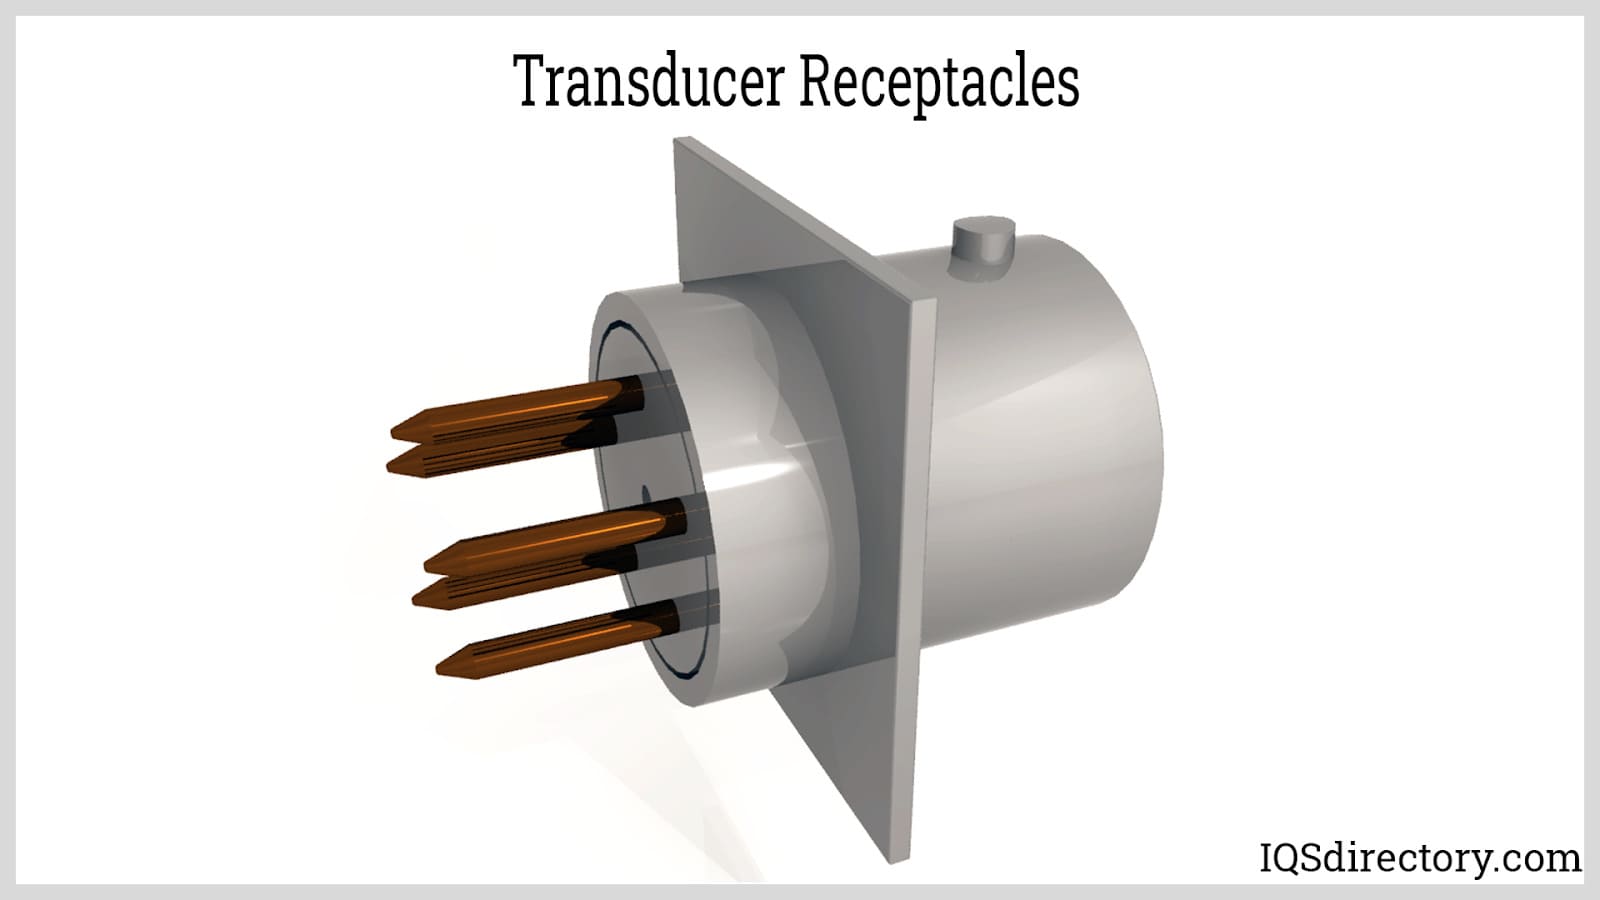 Transducer Receptacles